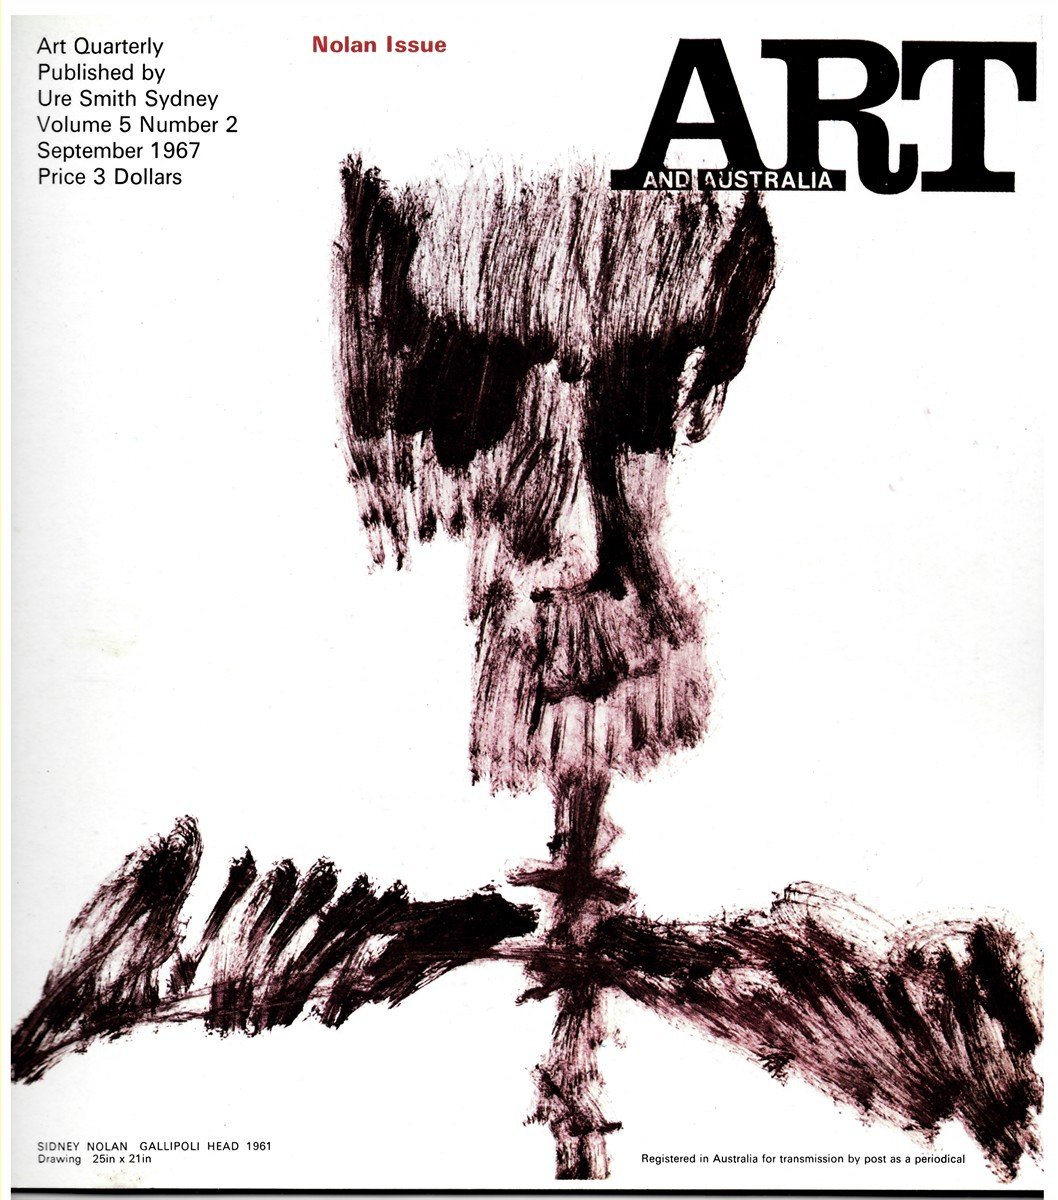 HORTON, MERVYN (EDITOR) - Art and Australia. Nolan Issue. Volume 5 Number 2 September 1967